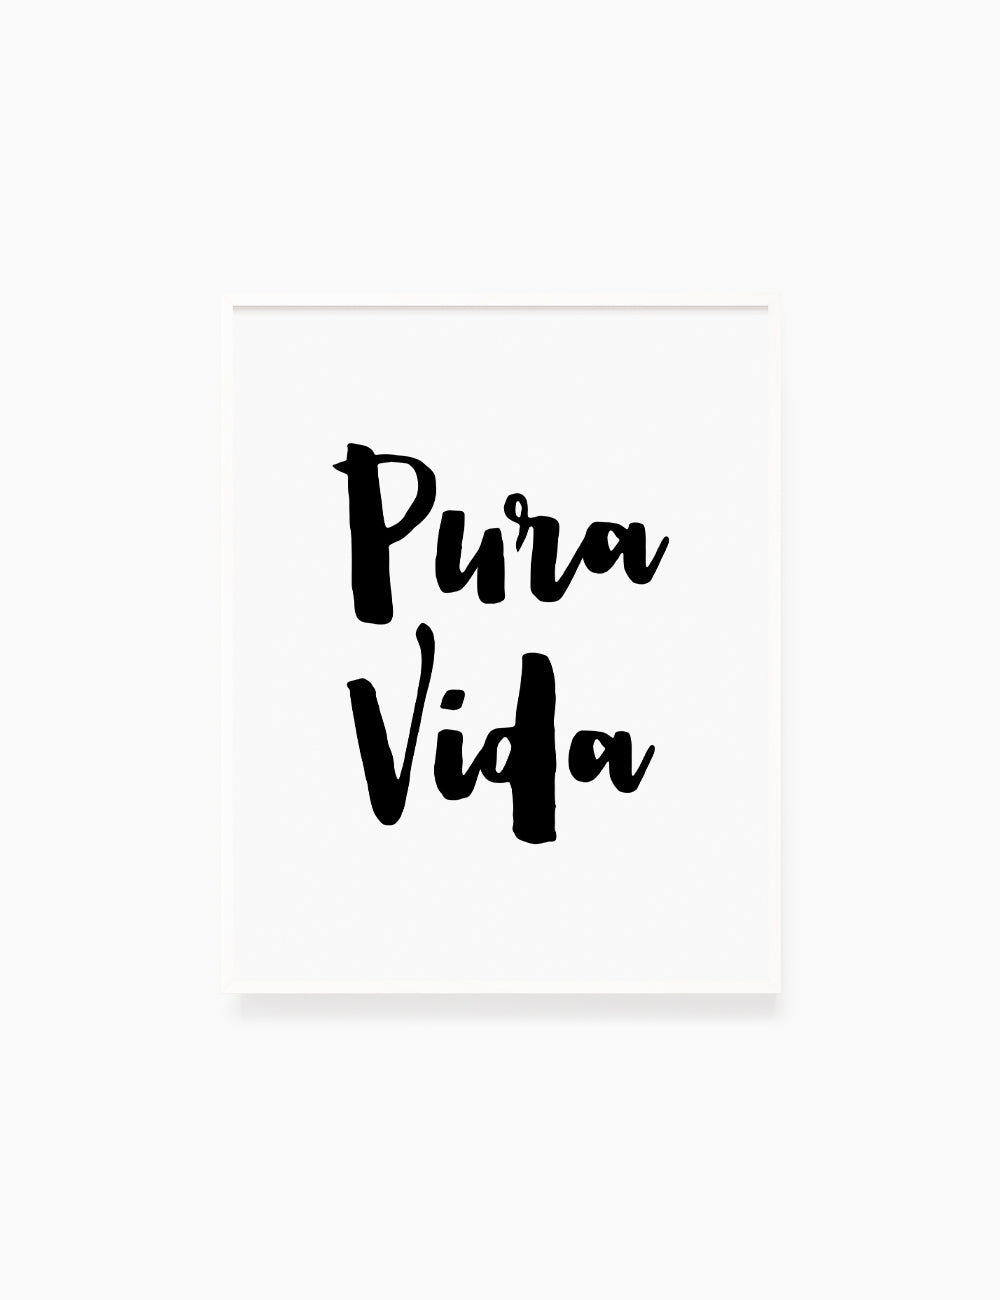 Printable Wall Art Quote: PURA VIDA Printable Poster. Inspirational Quote. Motivational Quote. WA006 - Paper Moon Art & Design